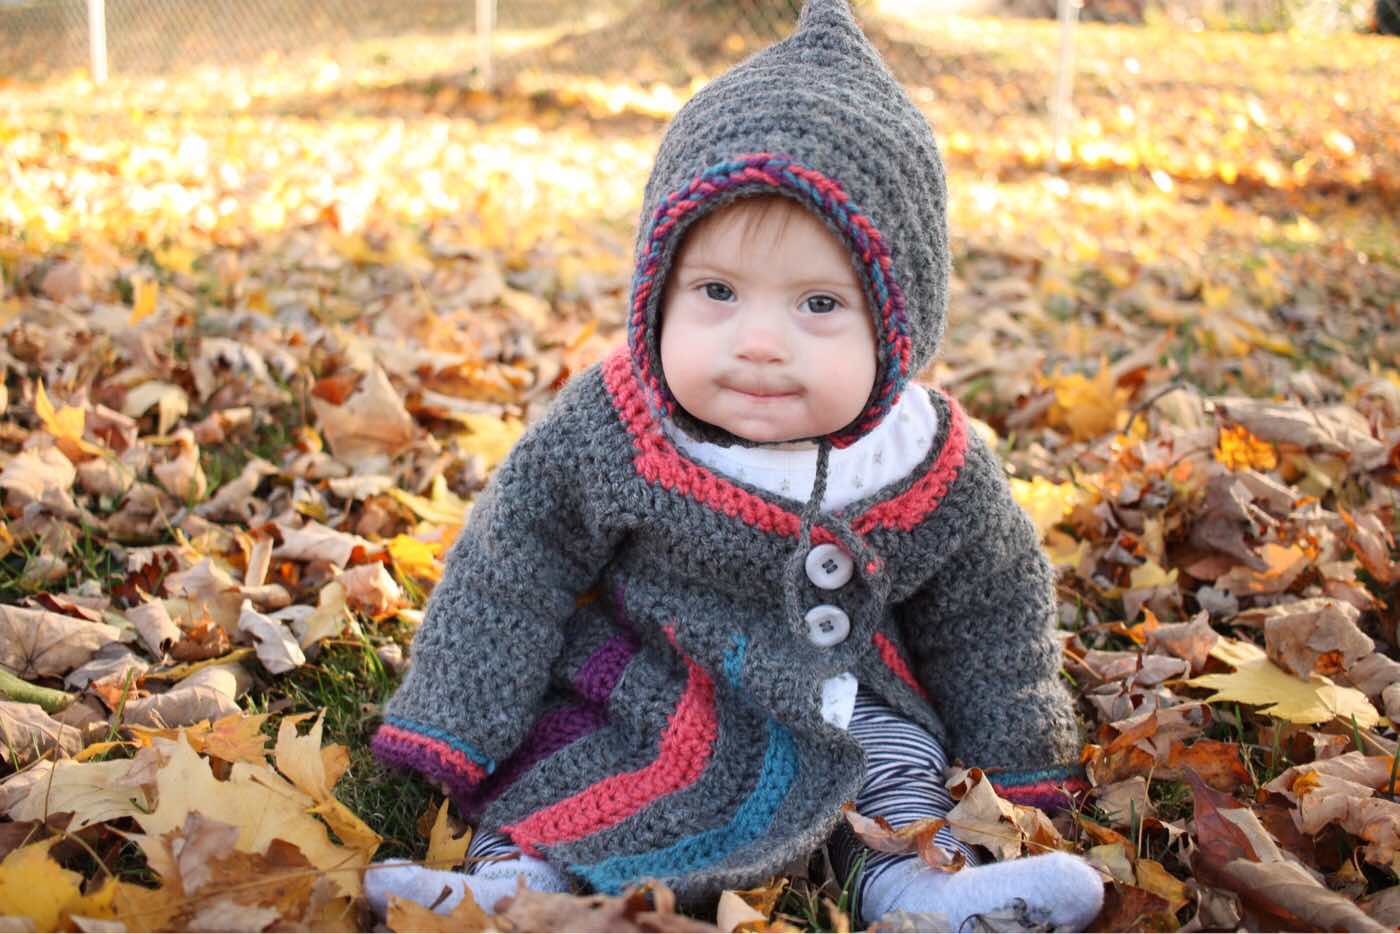 Baby rainbow sweater and pixie hat